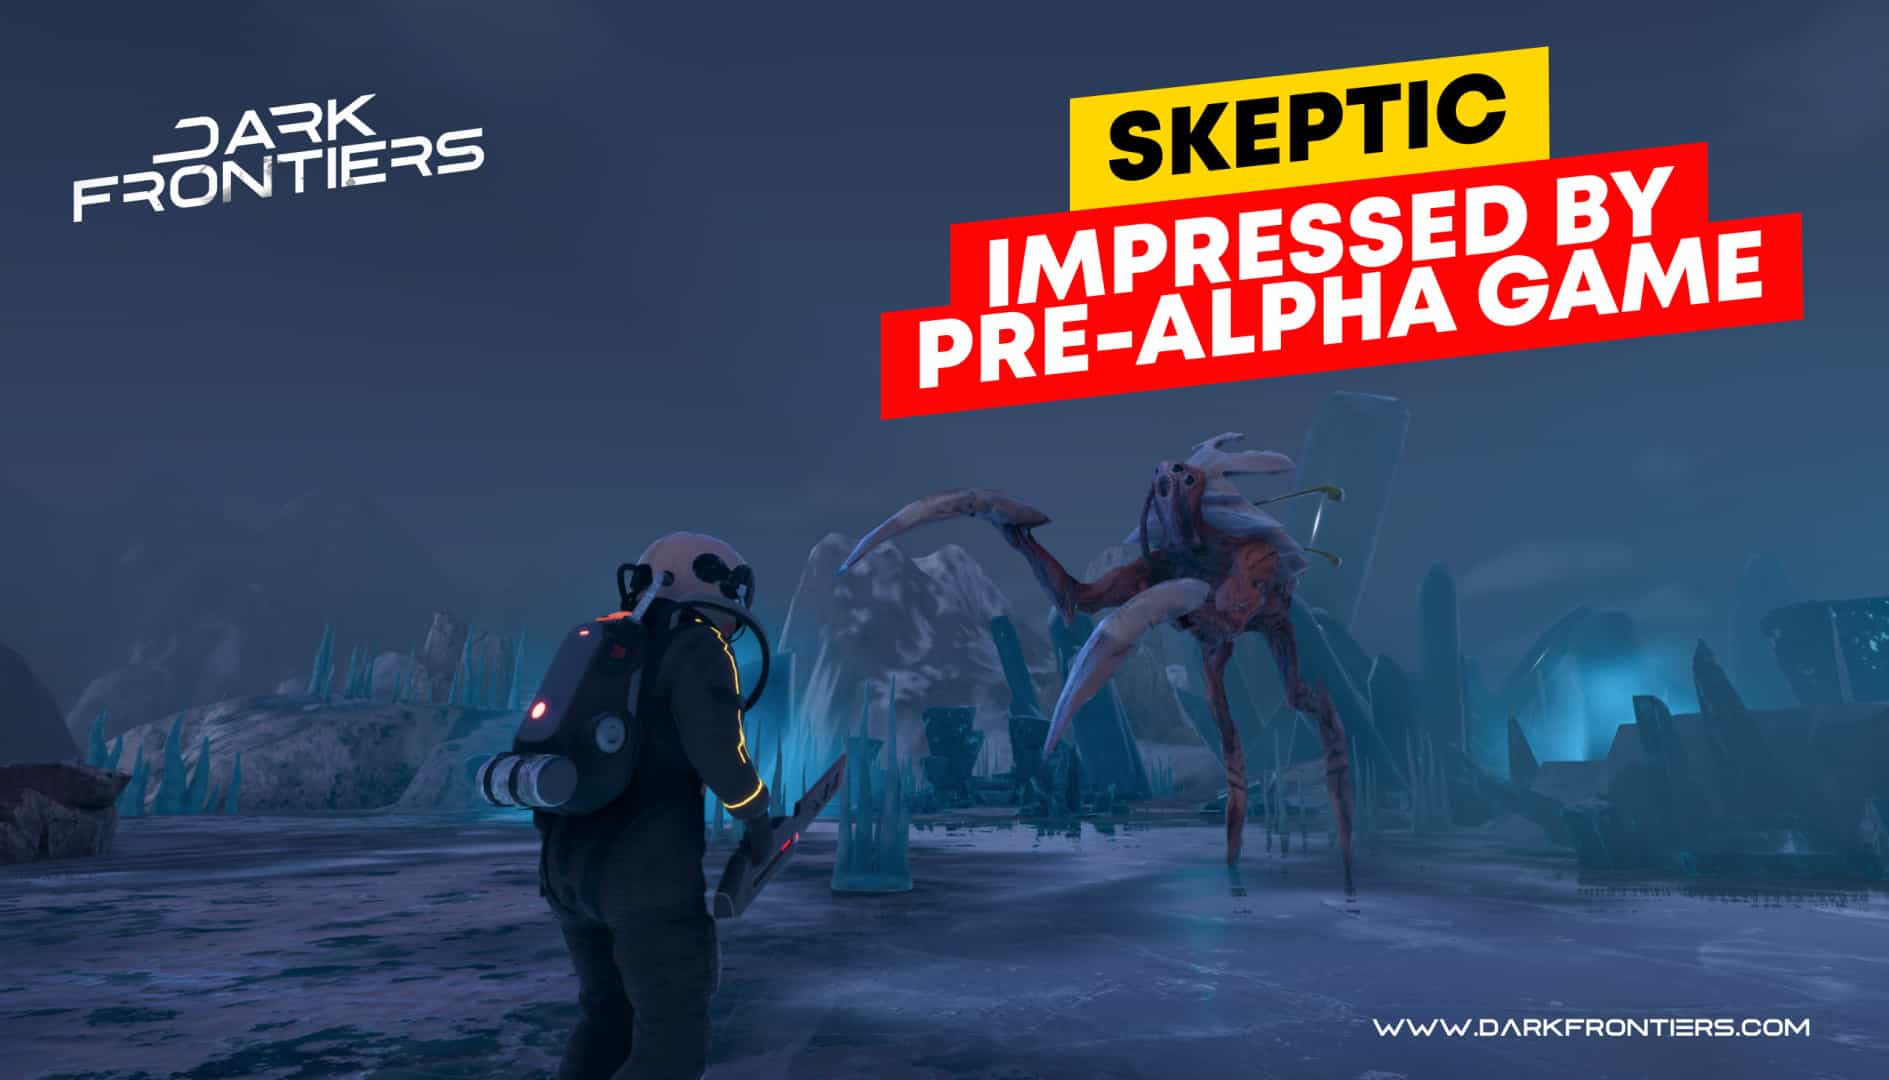 Dark-frontiers-skeptic-impressed-by-pre-alpha-game